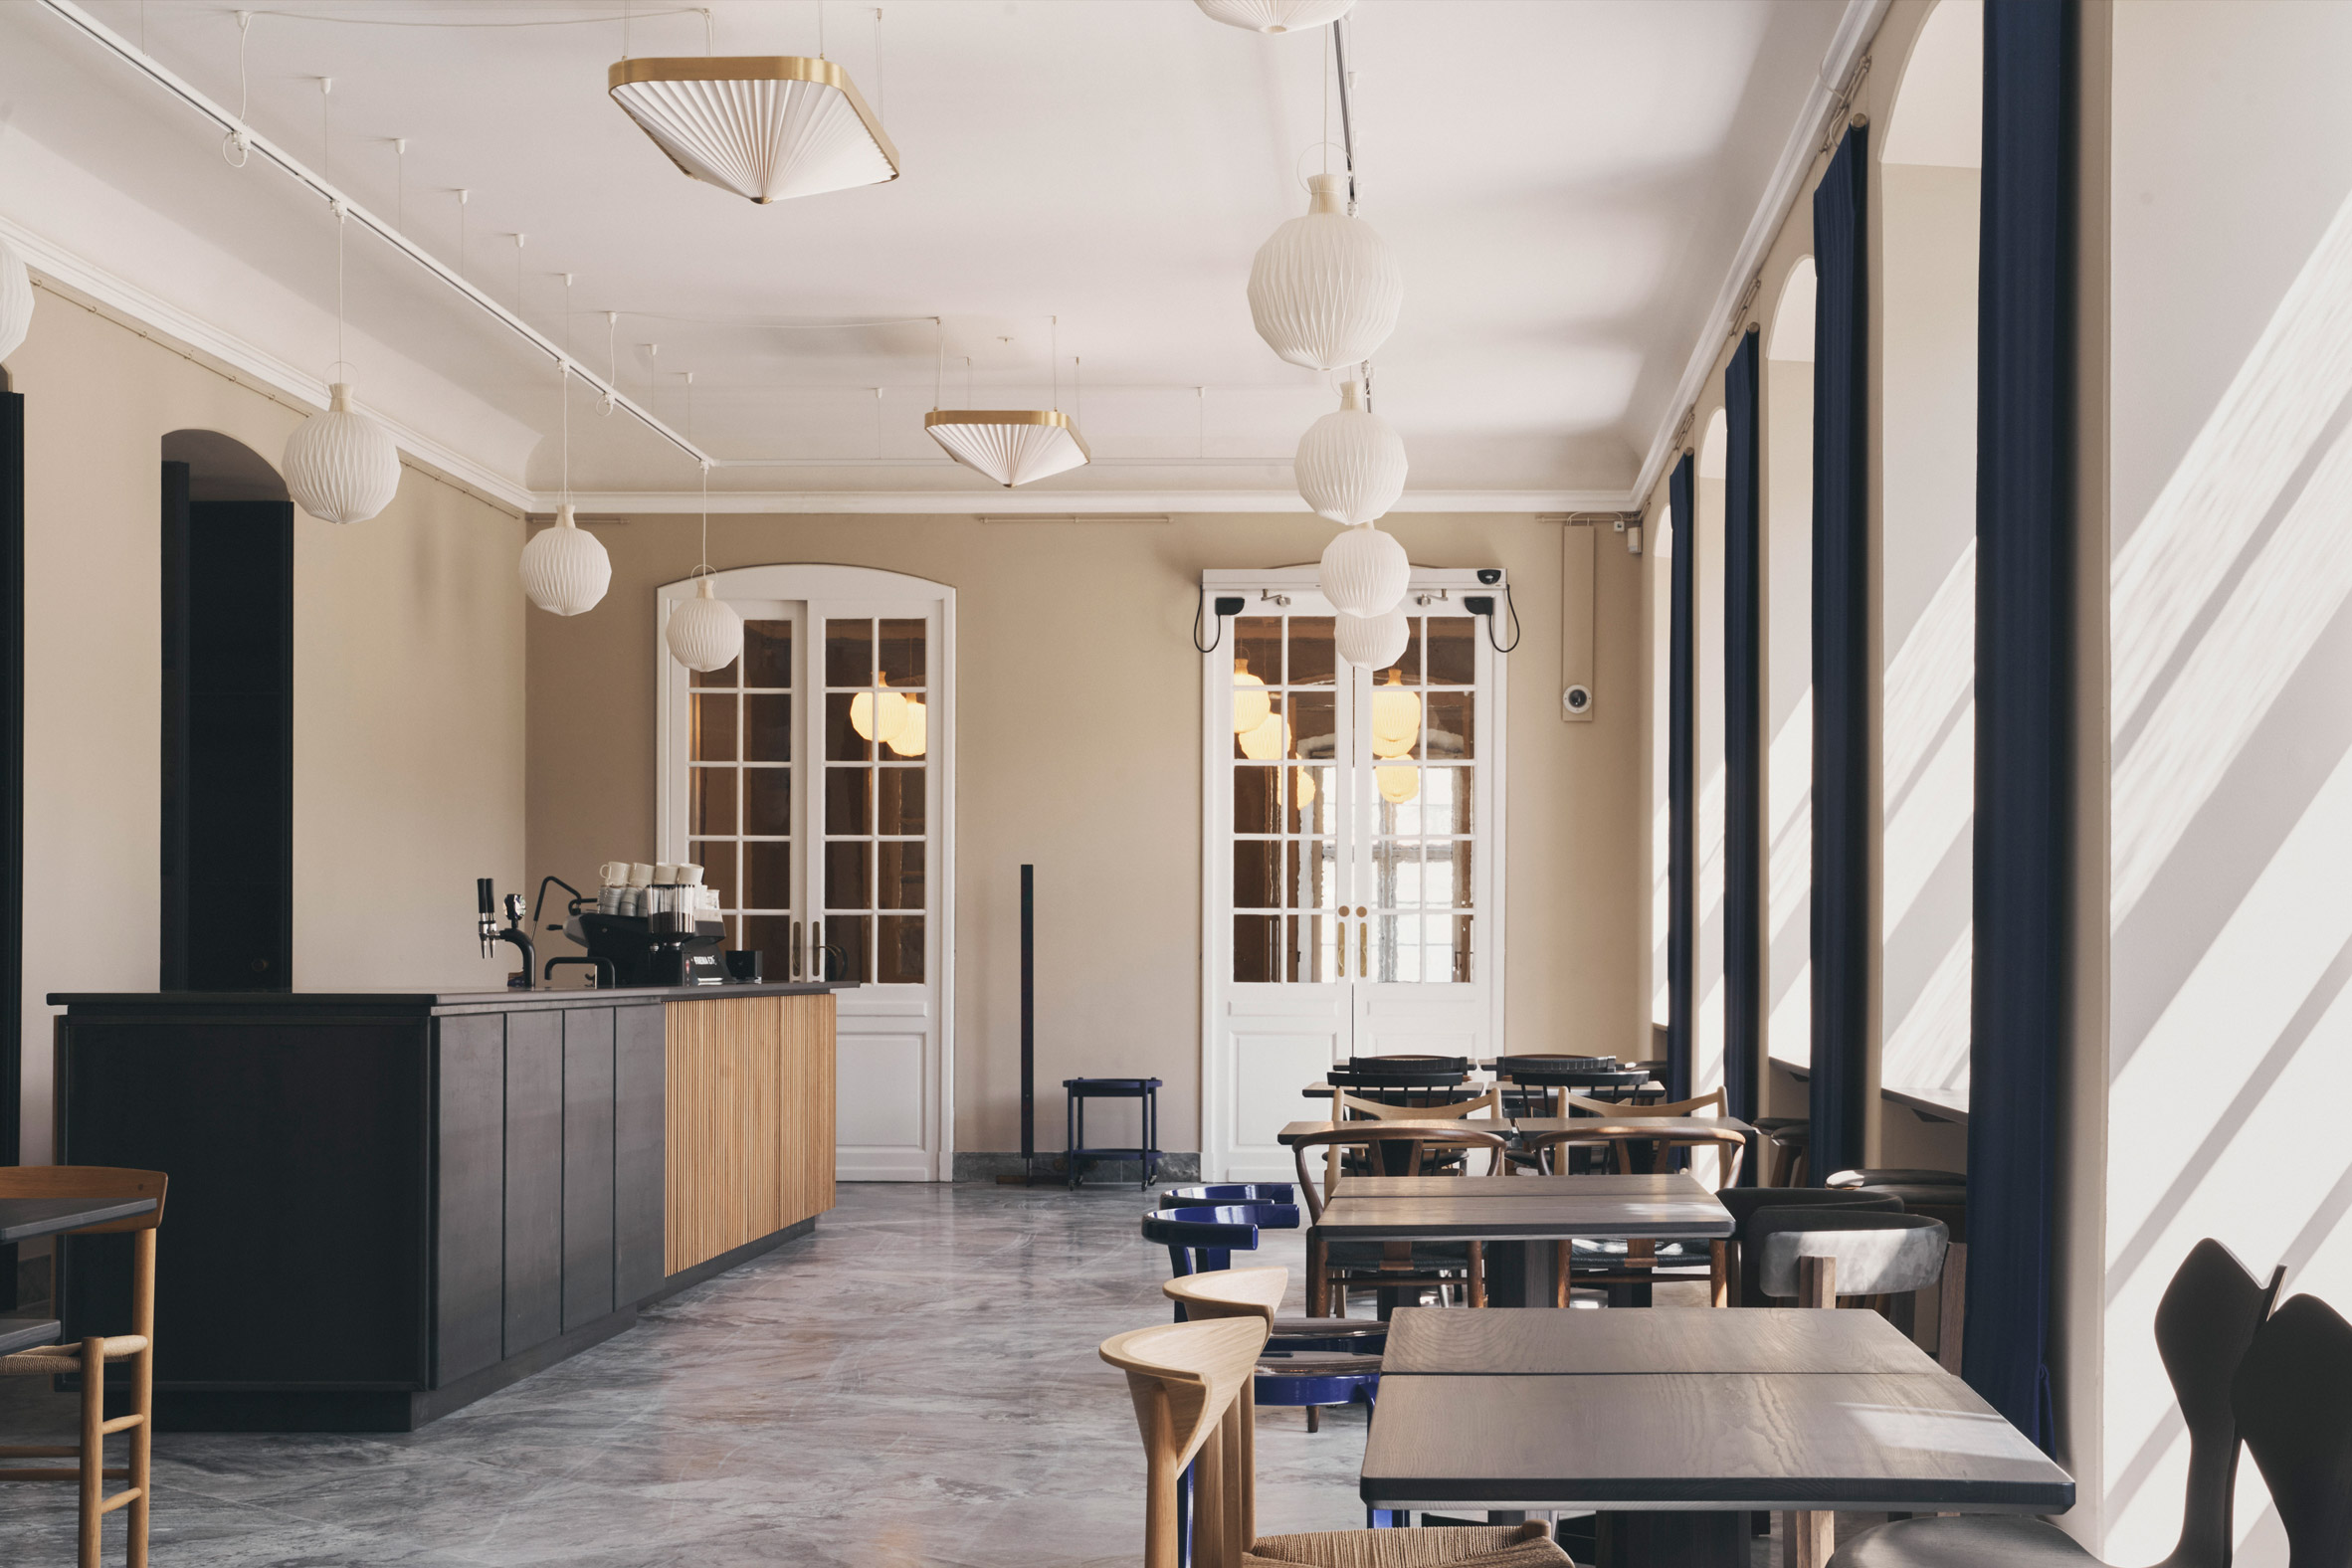 Cafe interior at Designmuseum Denmark